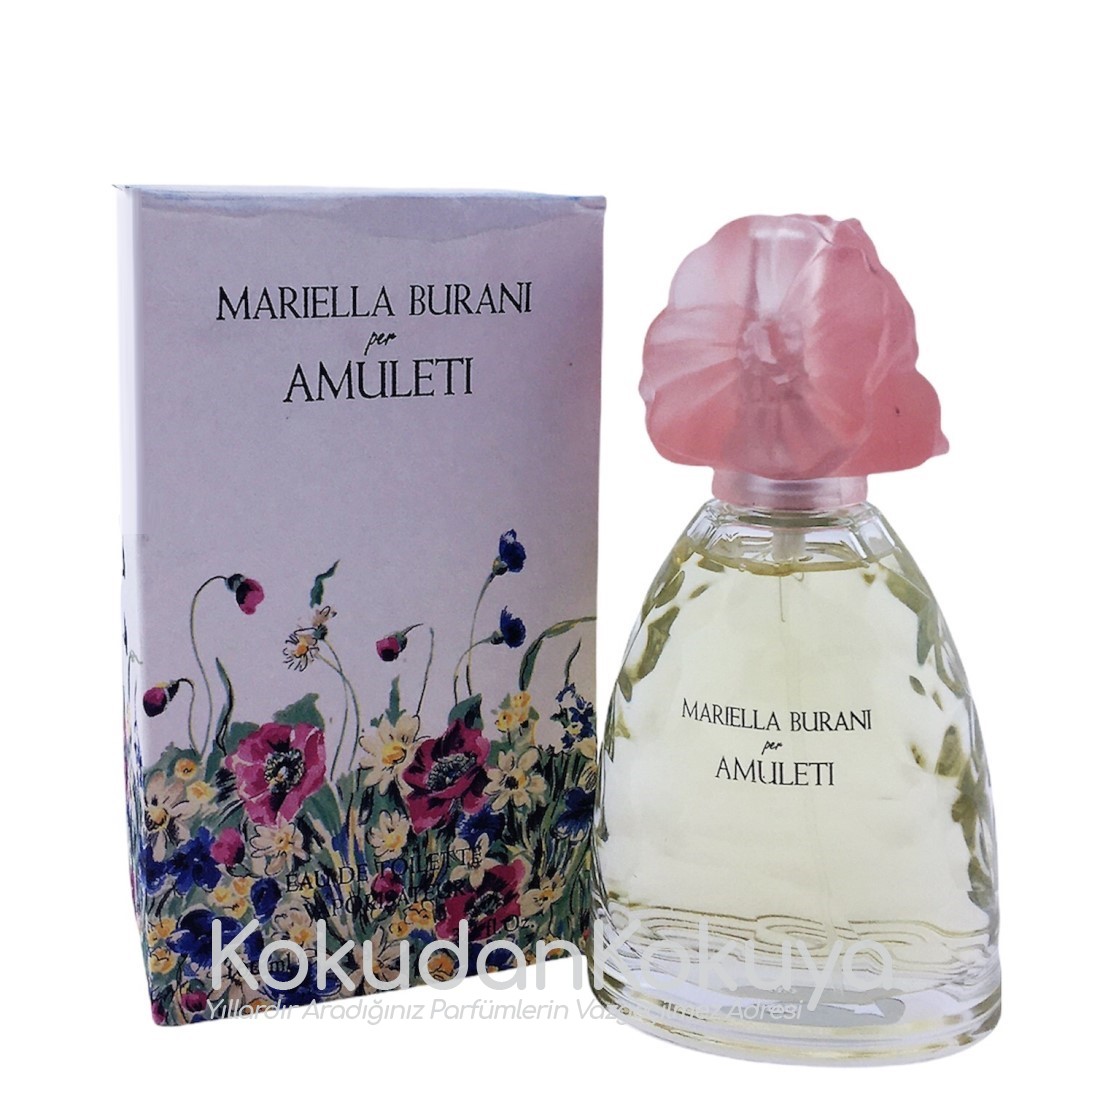 MARIELLA BURANI Amuleti Women (Vintage) Parfüm Kadın 100ml Eau De Toilette (EDT) Sprey 